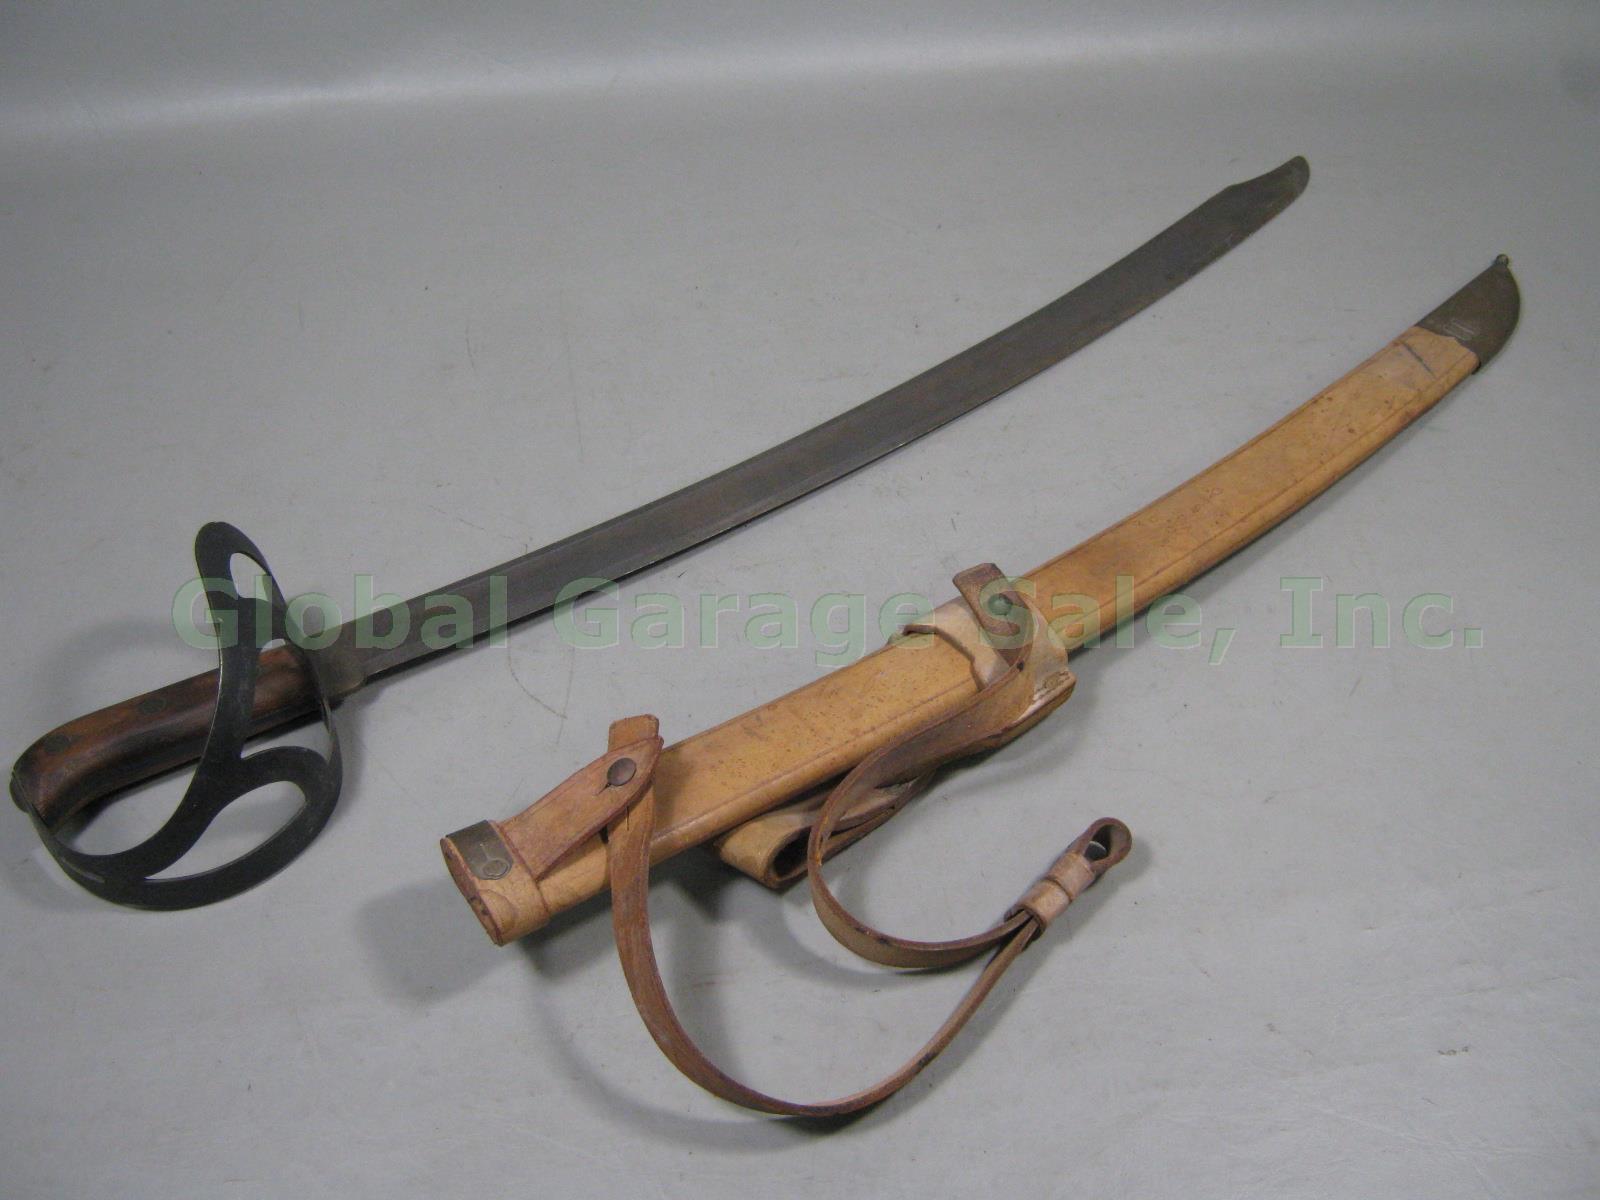 Vtg Milsco USN Navy Naval Klewang Cutlass Sword W/ Original Leather Scabbard NR!